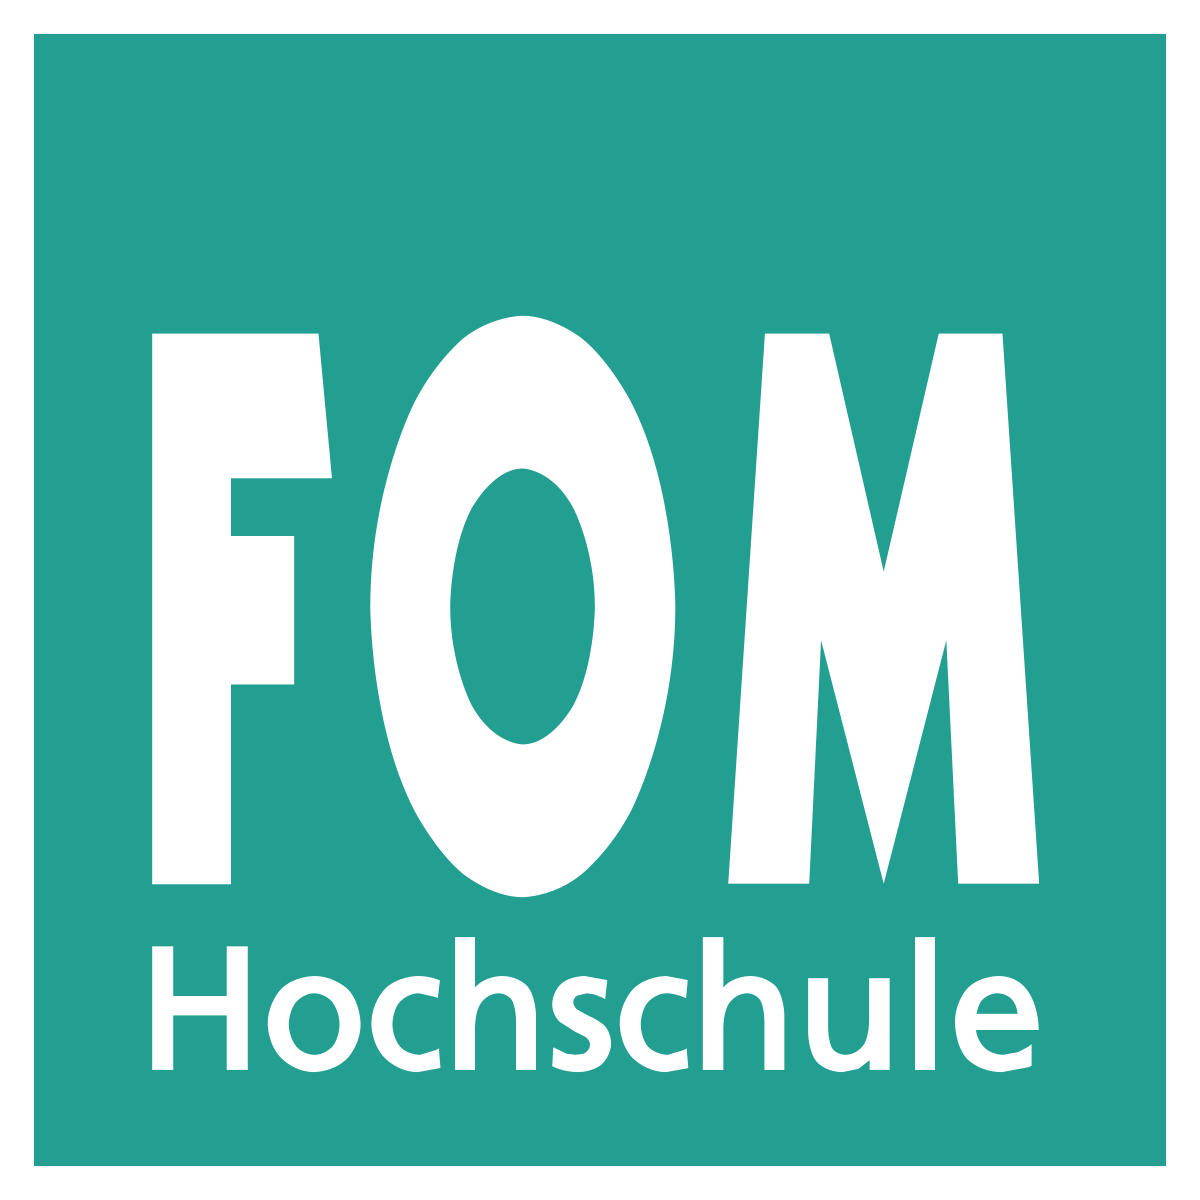 Hochschule für Oekonomie Management logo